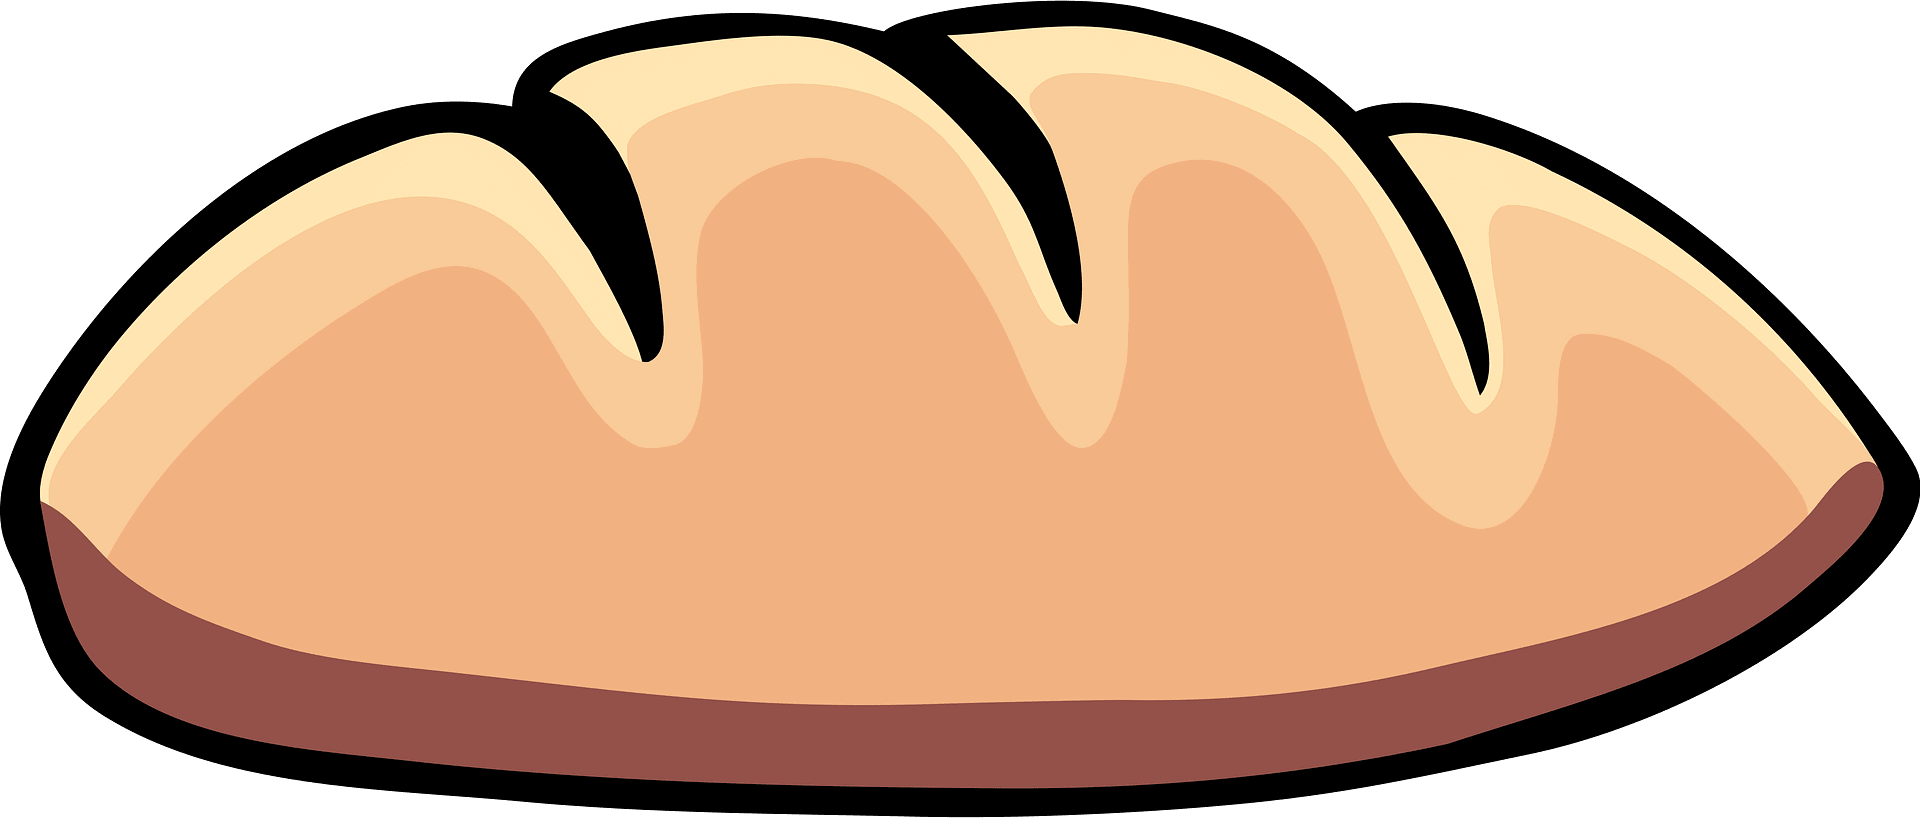 Bread clipart transparent 6